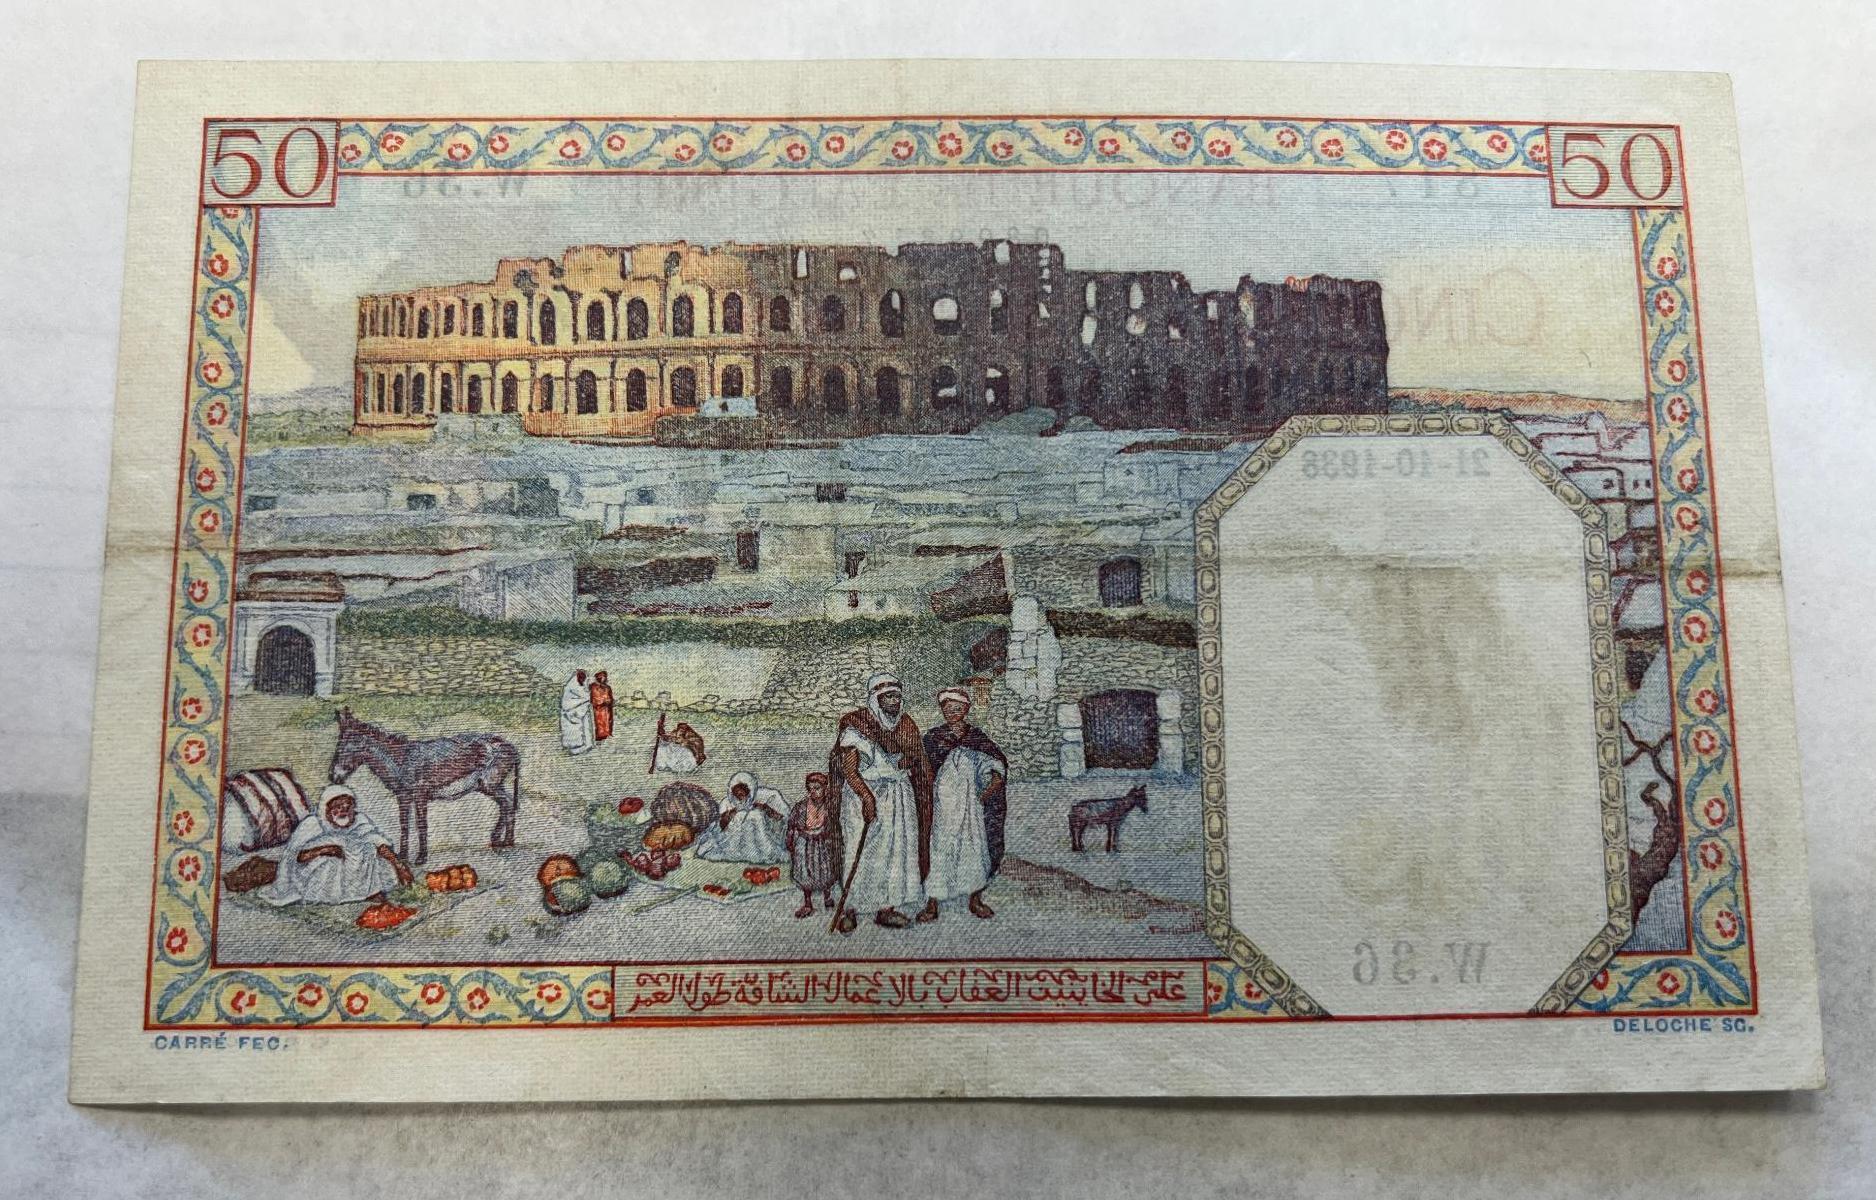 1938 Algeria 50 Franc banknote, AU